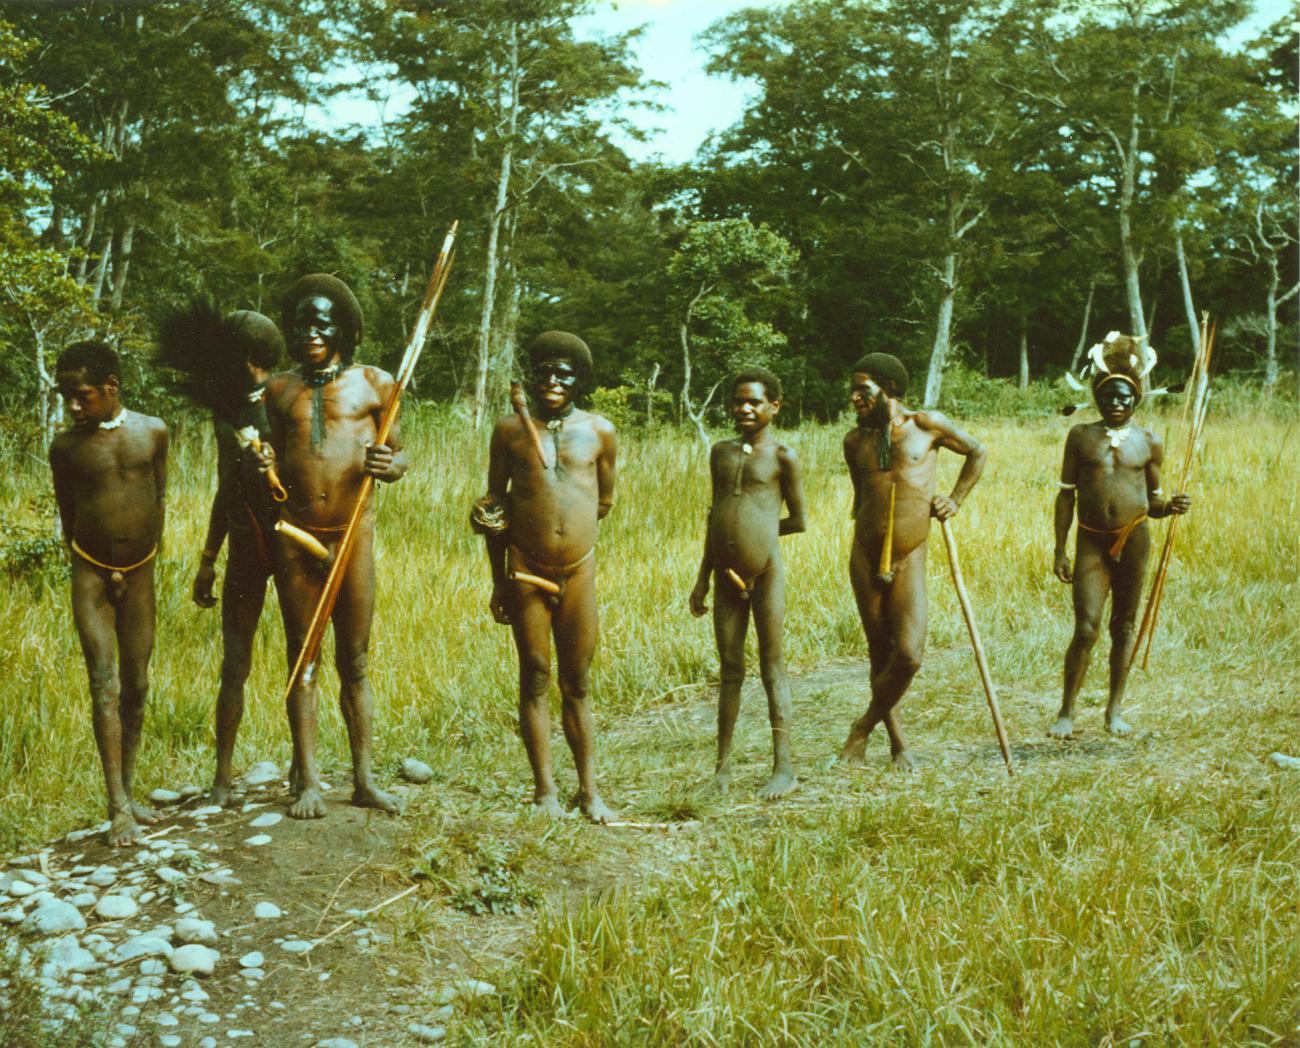 BD/39/19 - 
group of Papuan men
